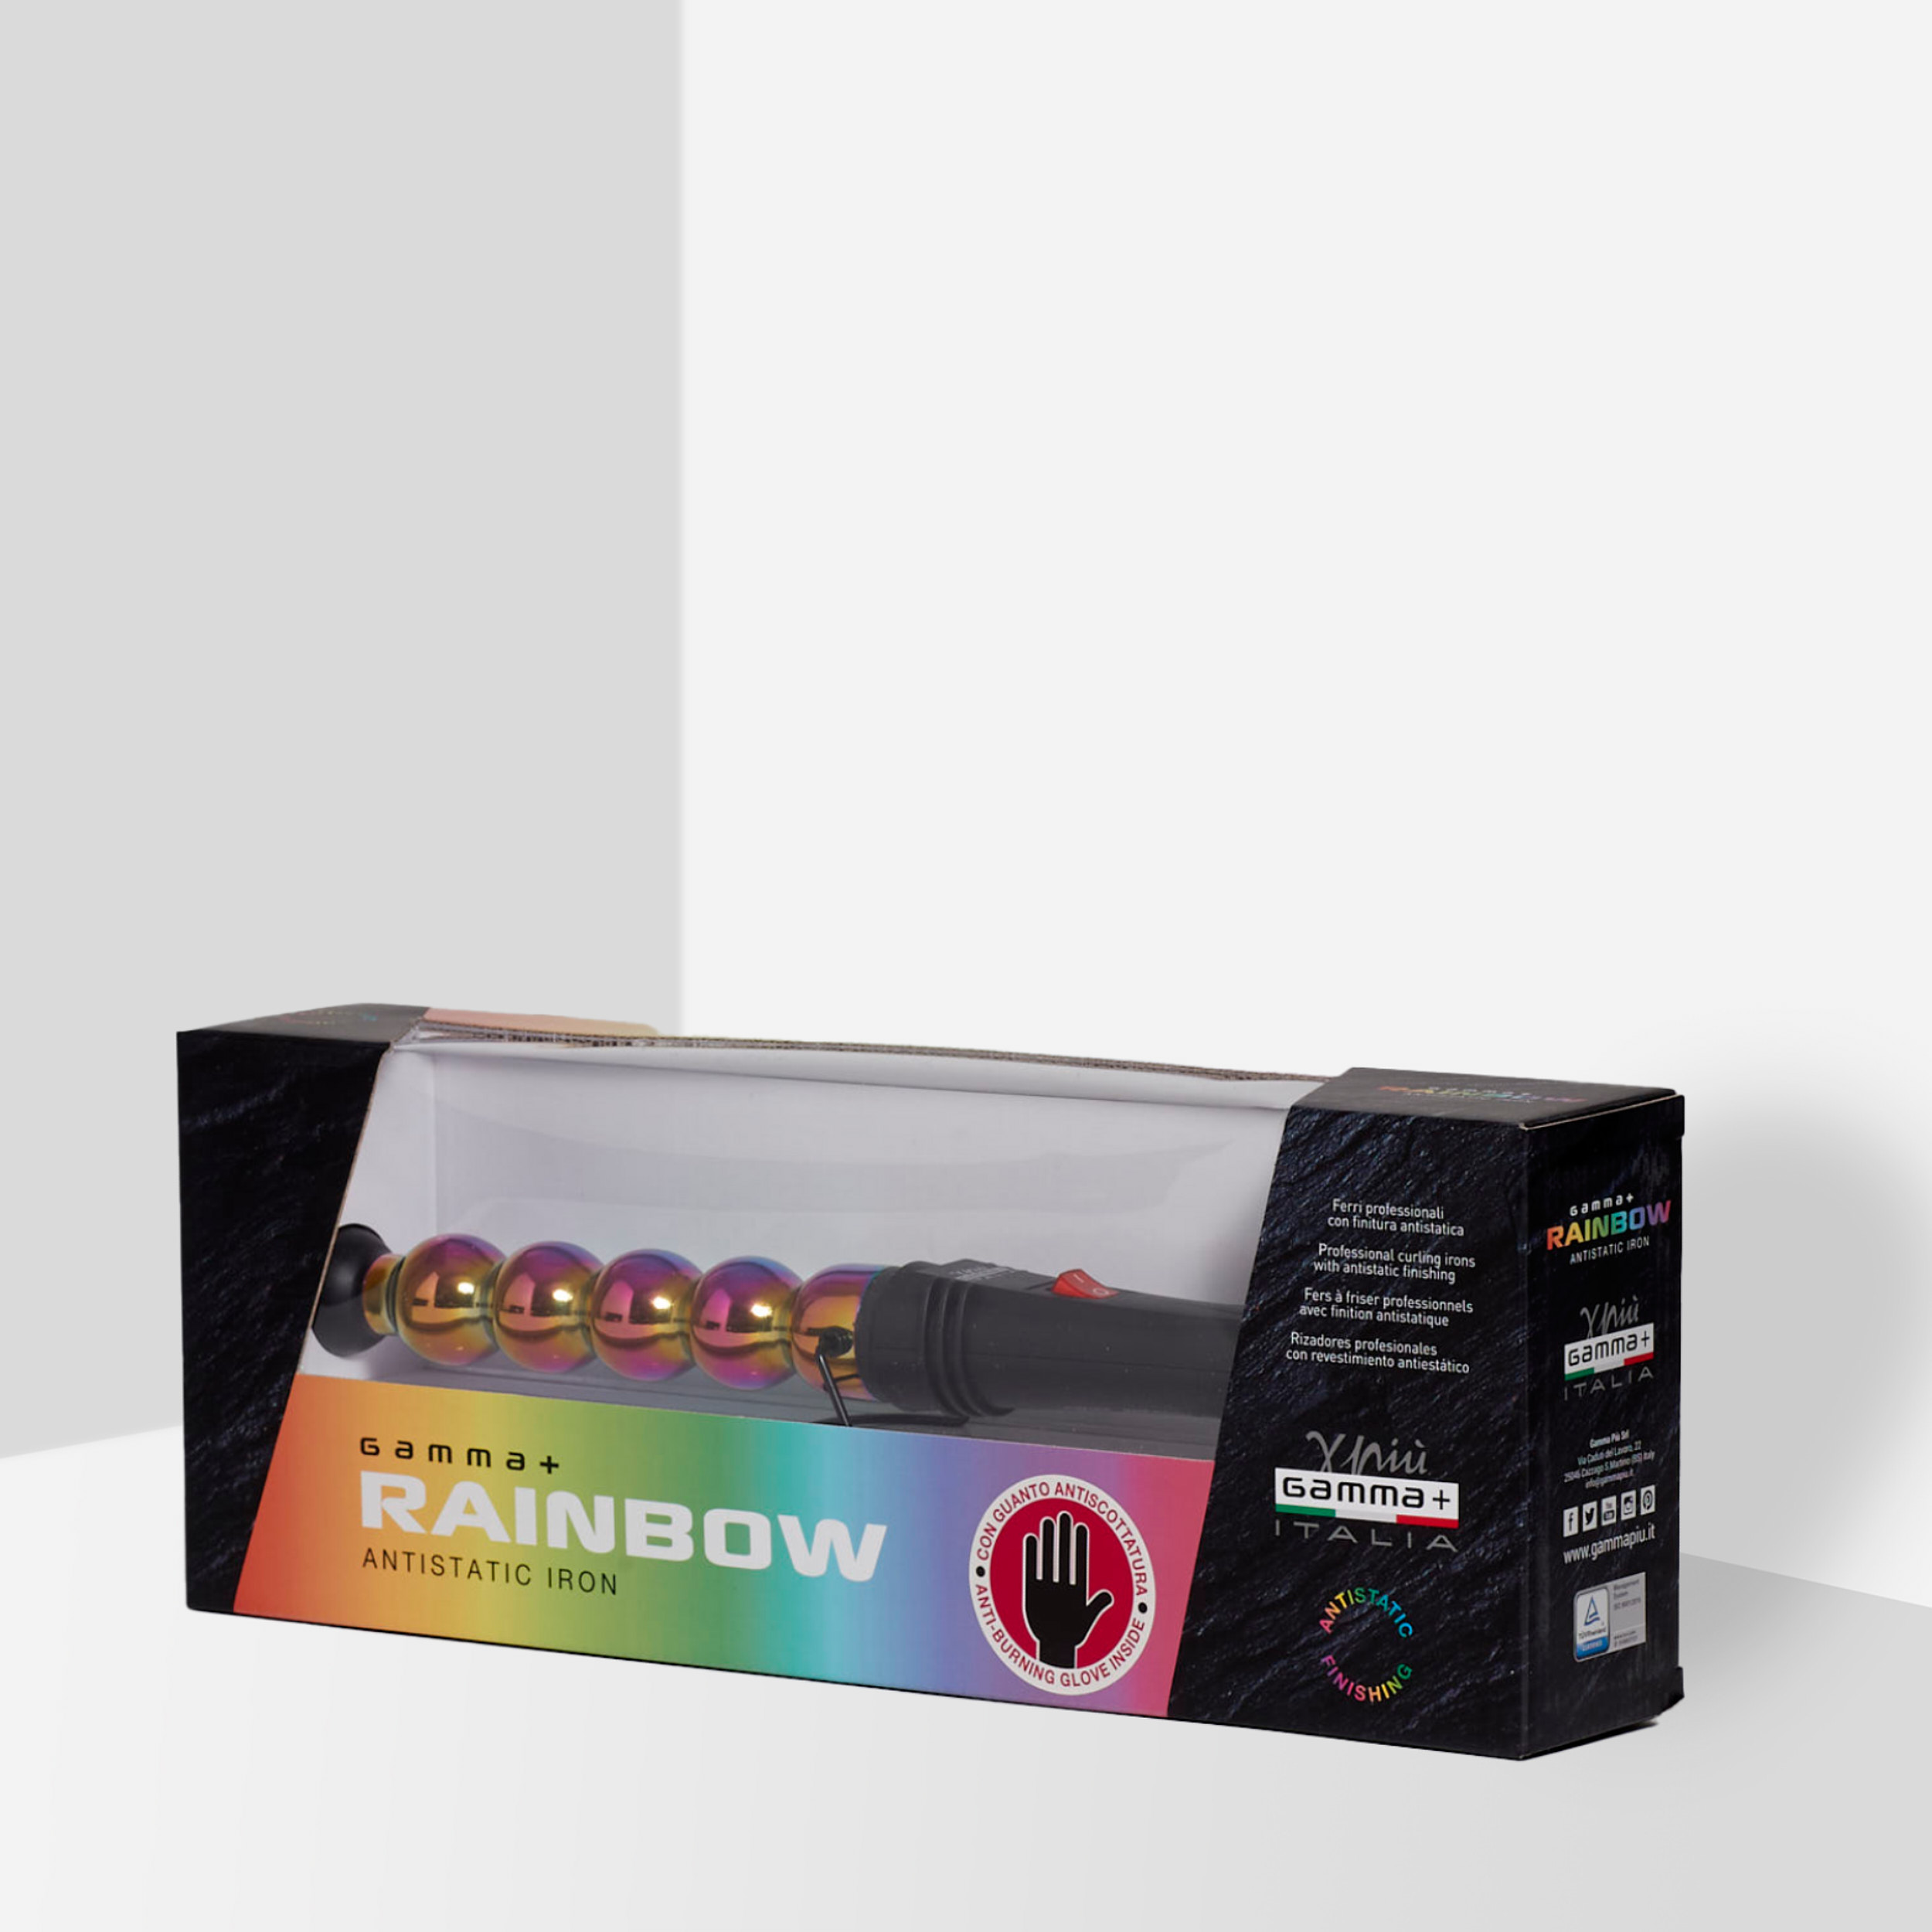 GammaPiù Rainbow Iron Bubble Diametro 33mm